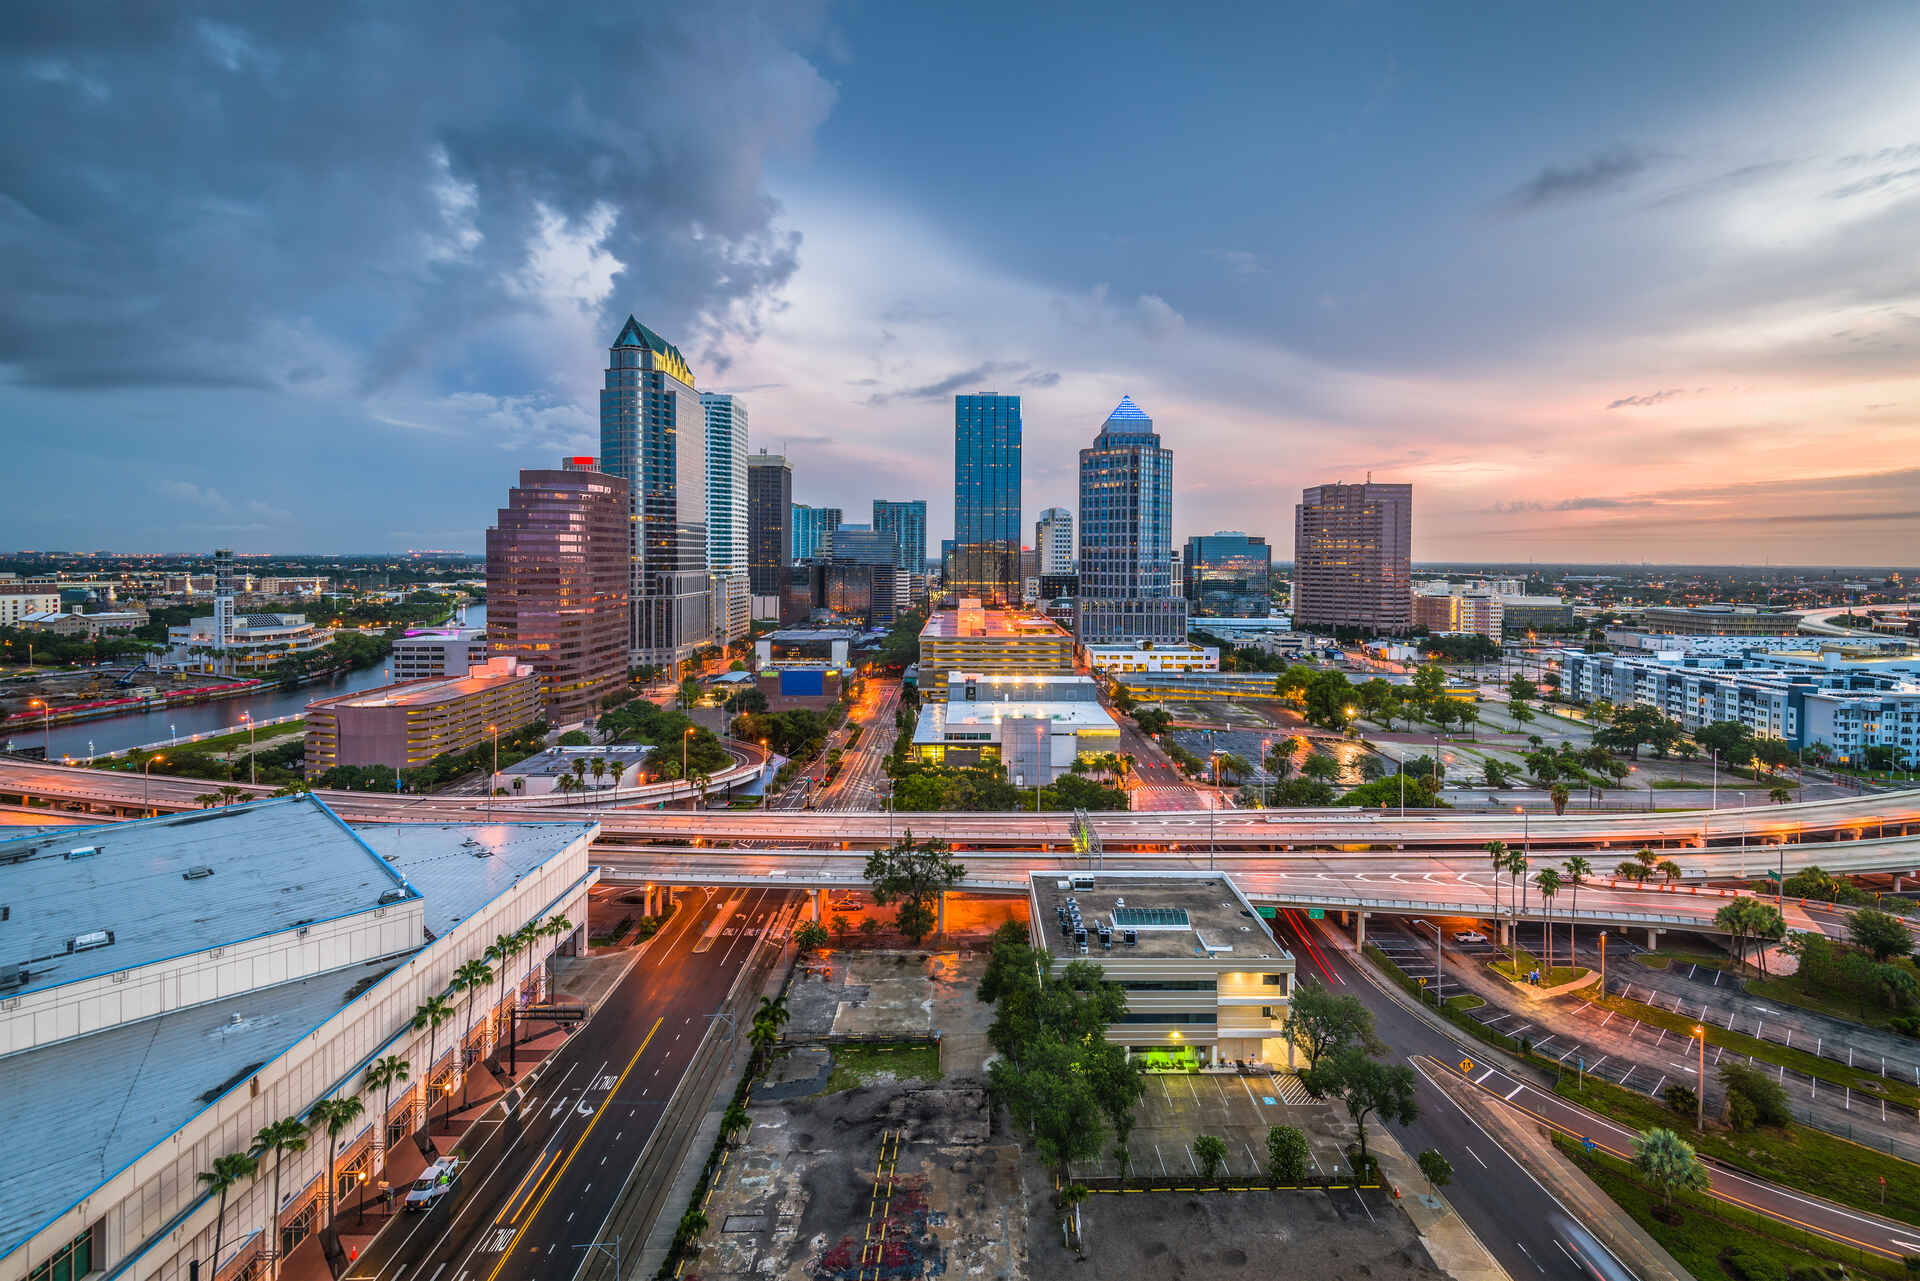 Aerial view of Tampa, FL